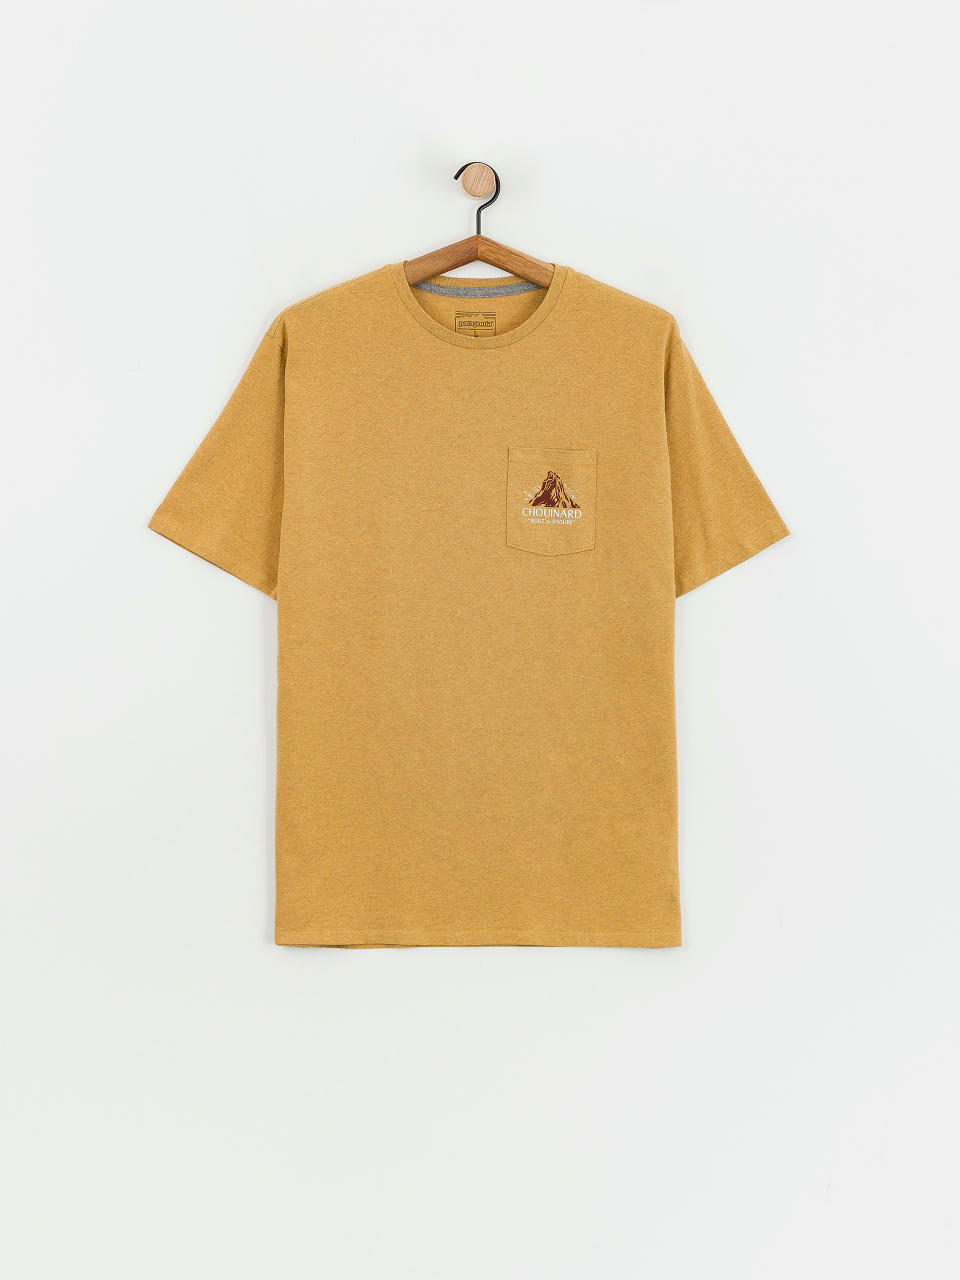 Patagonia T-Shirt Chouinard Crest Pocket Responsibili (pufferfish gold)